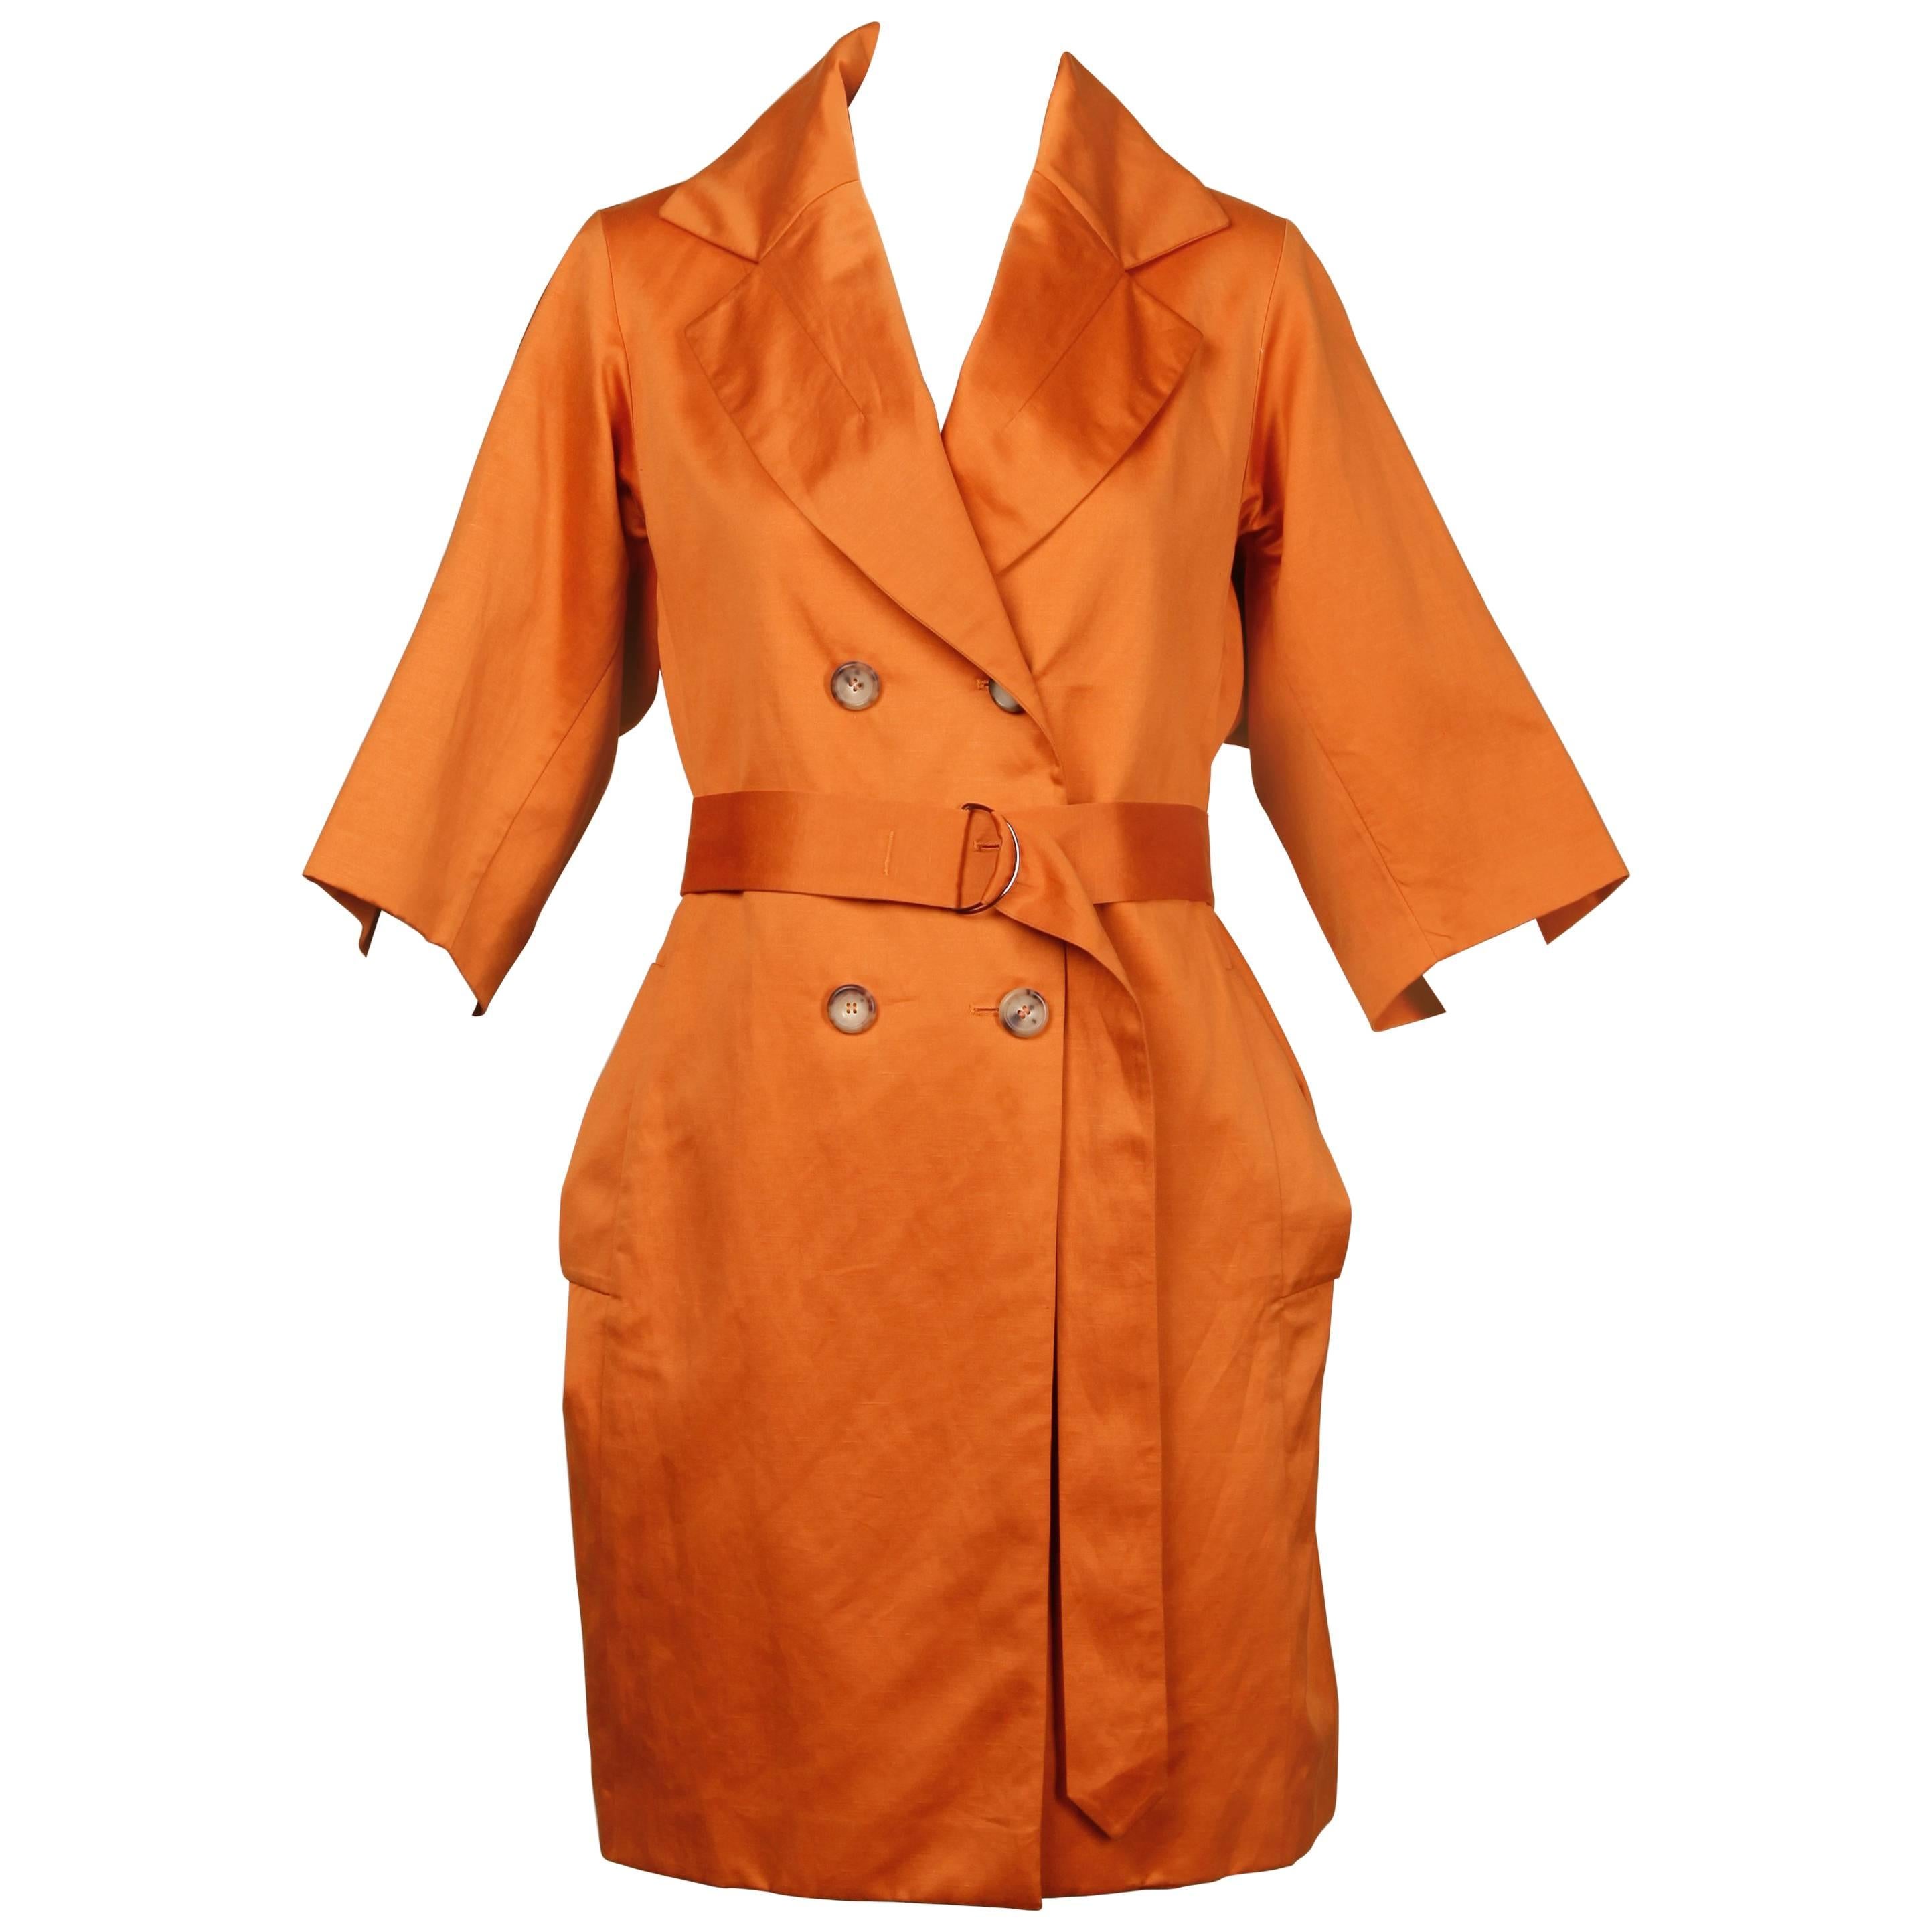 Yves Saint Laurent Rust/ Orange Fall Trench Coat Jacket For Sale